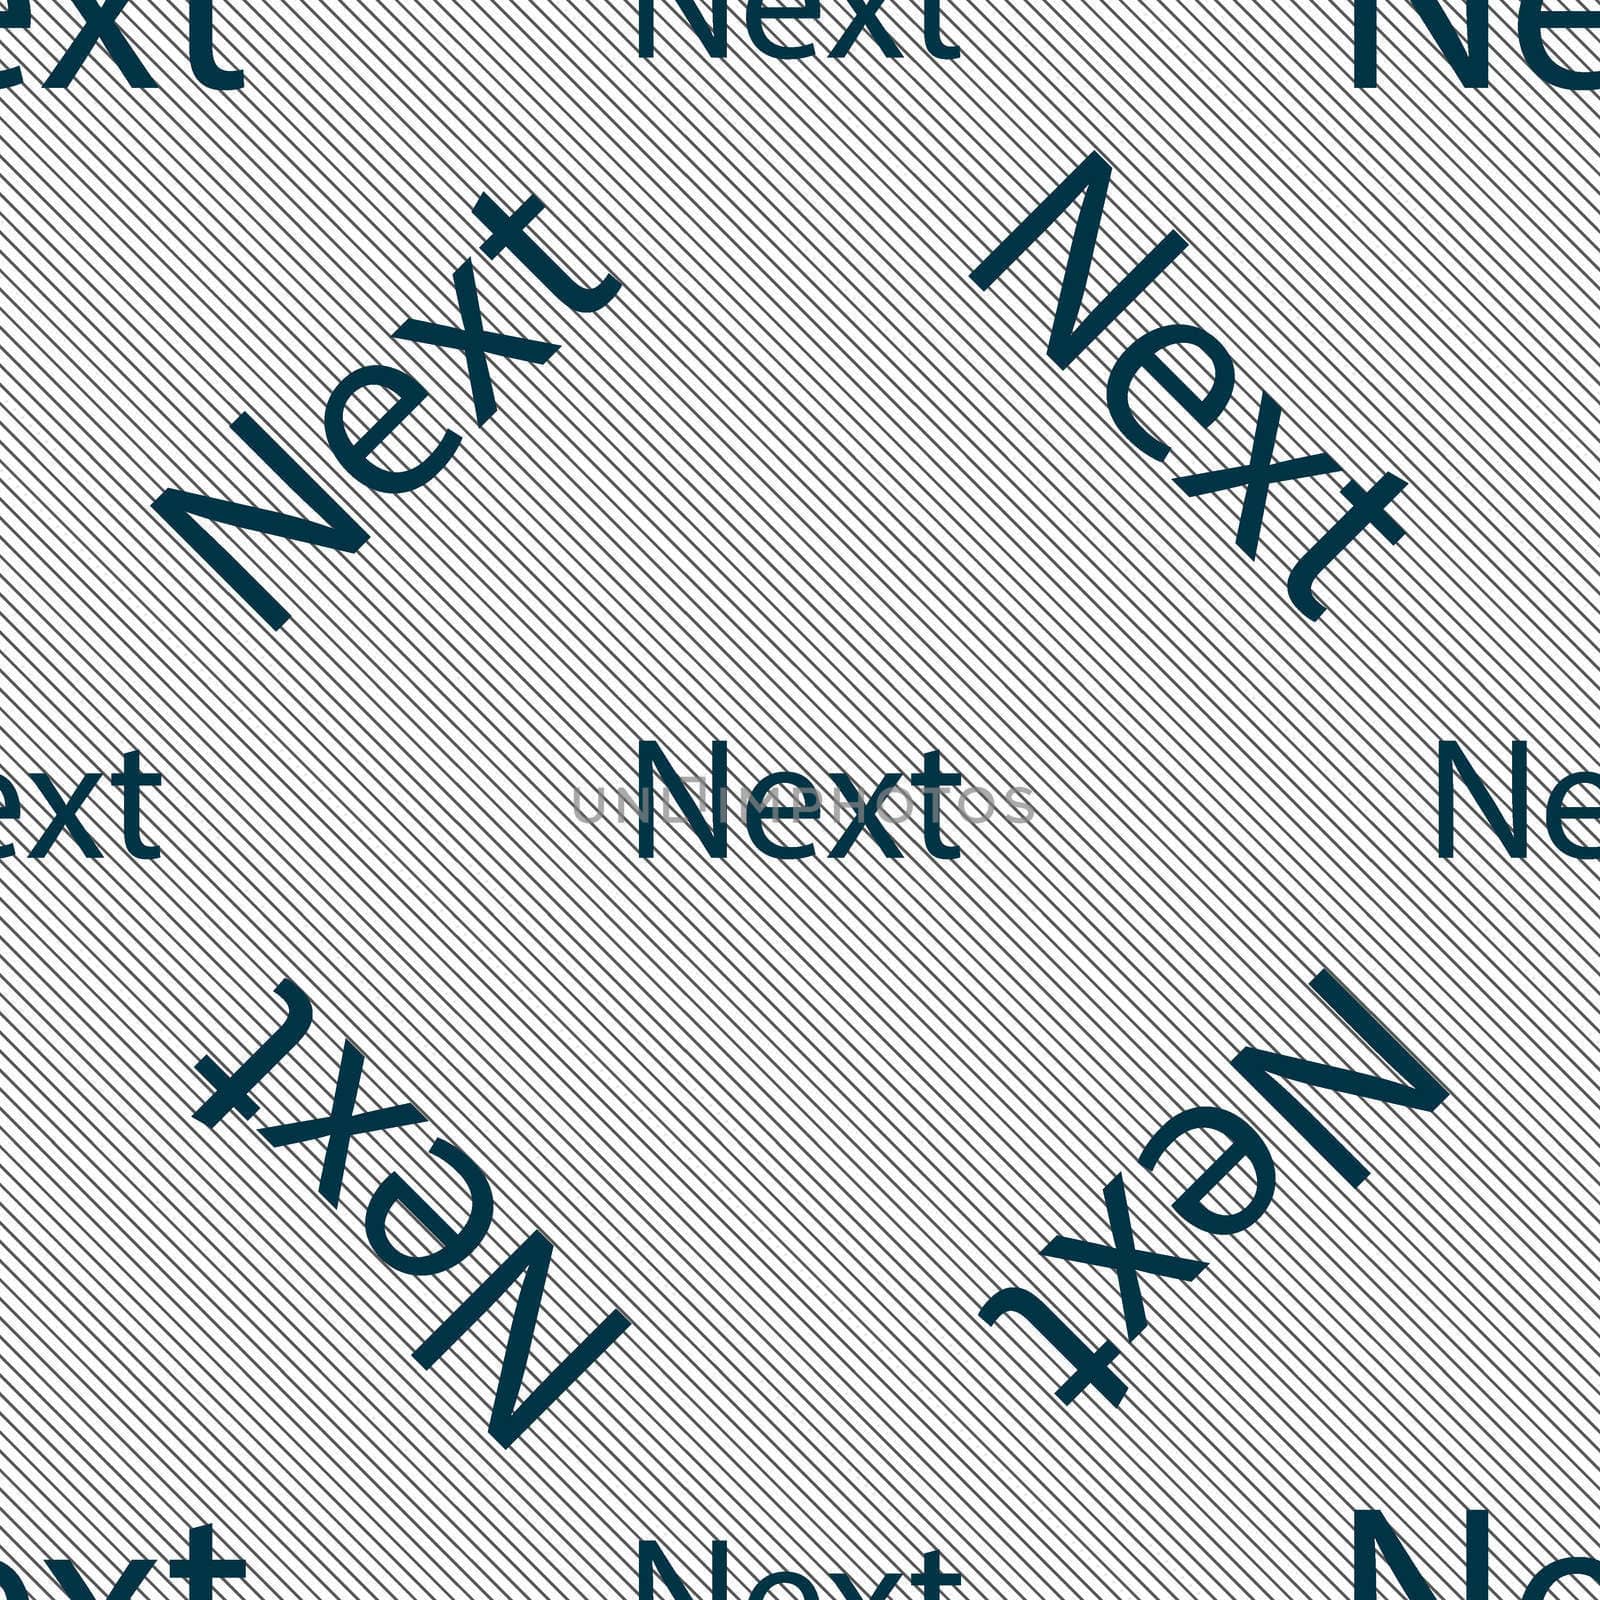 Next sign icon. Navigation symbol. Seamless pattern with geometric texture. illustration